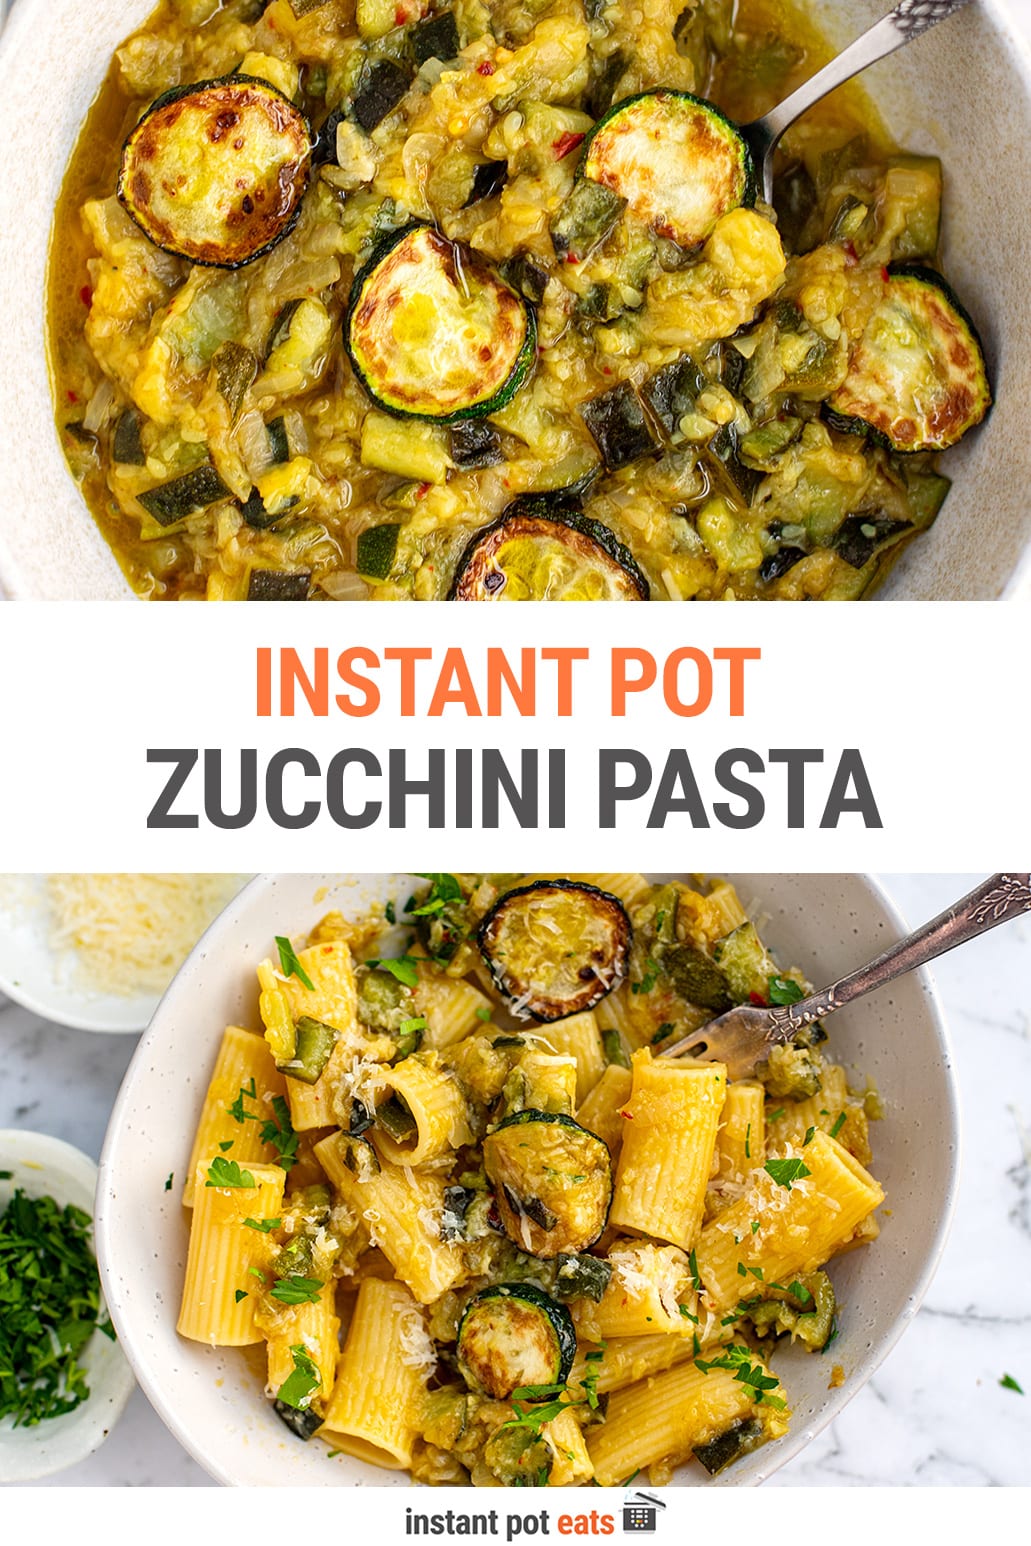 Instant Pot Zucchini Pasta (Meghan Markle's Recipe)